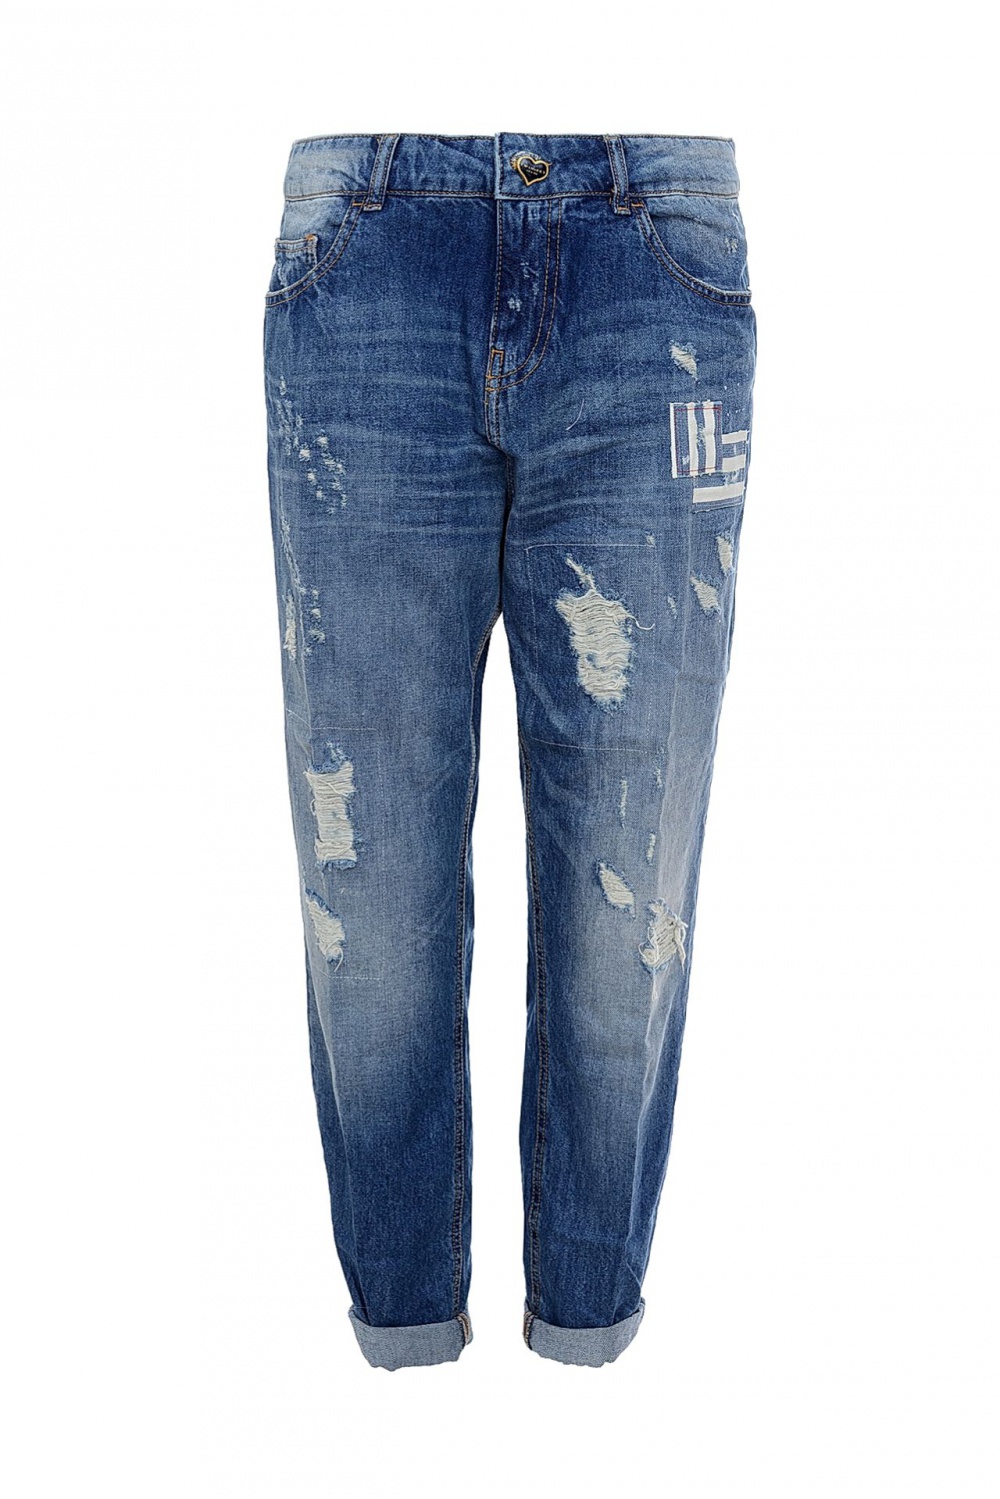 Новые джинсы TWIN-SET JEANS 33 размер